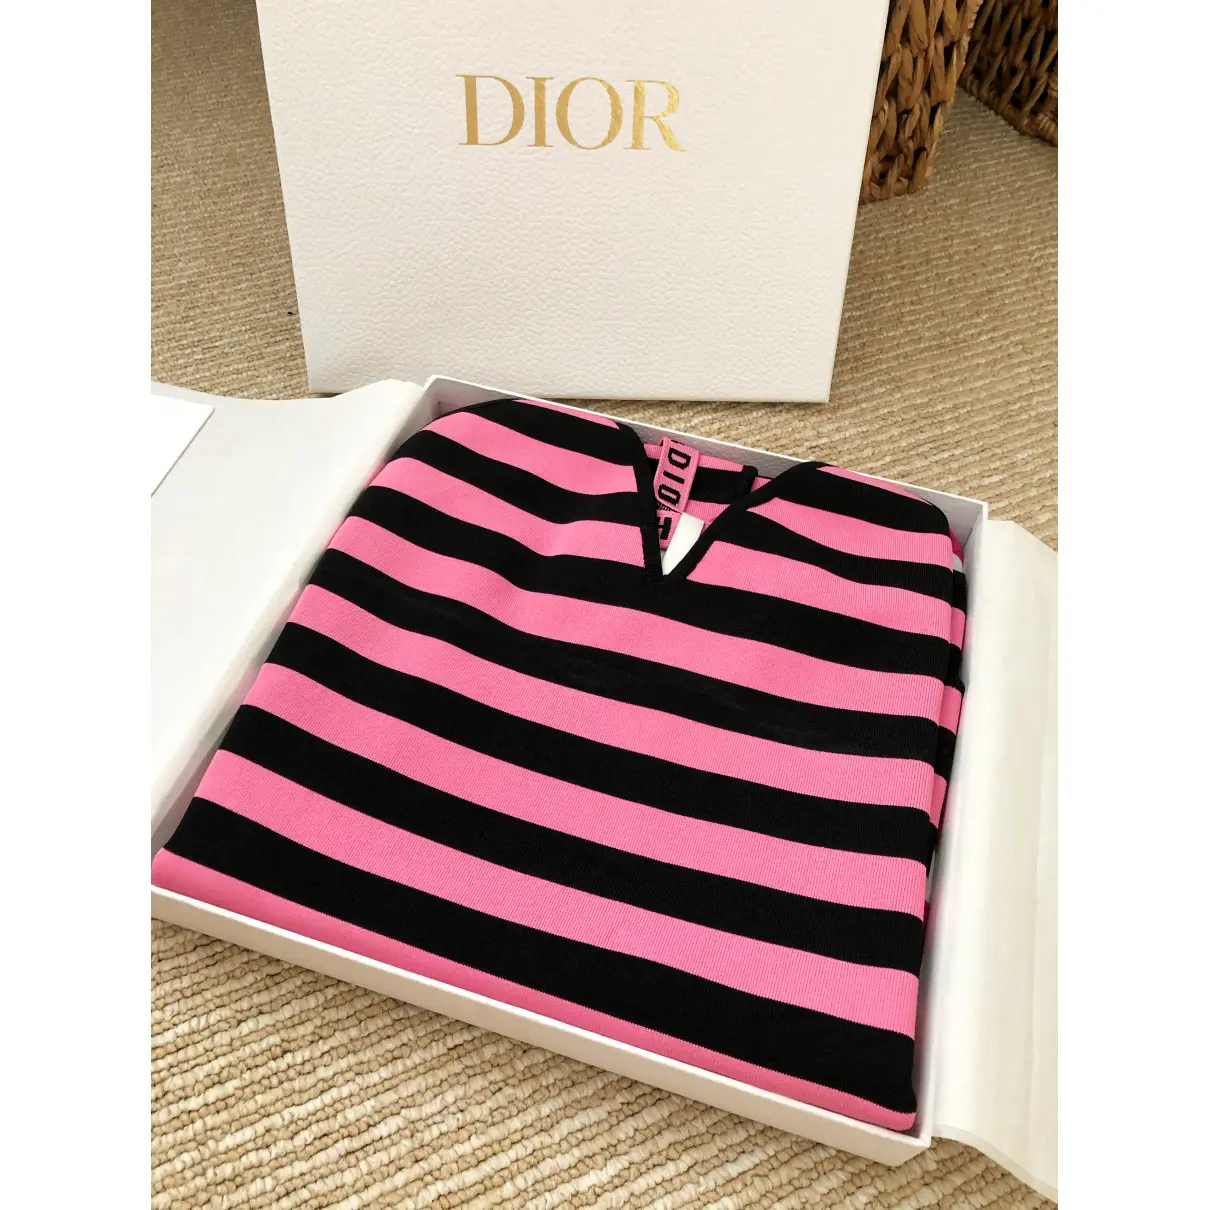 Buy Dior J'Adior top online